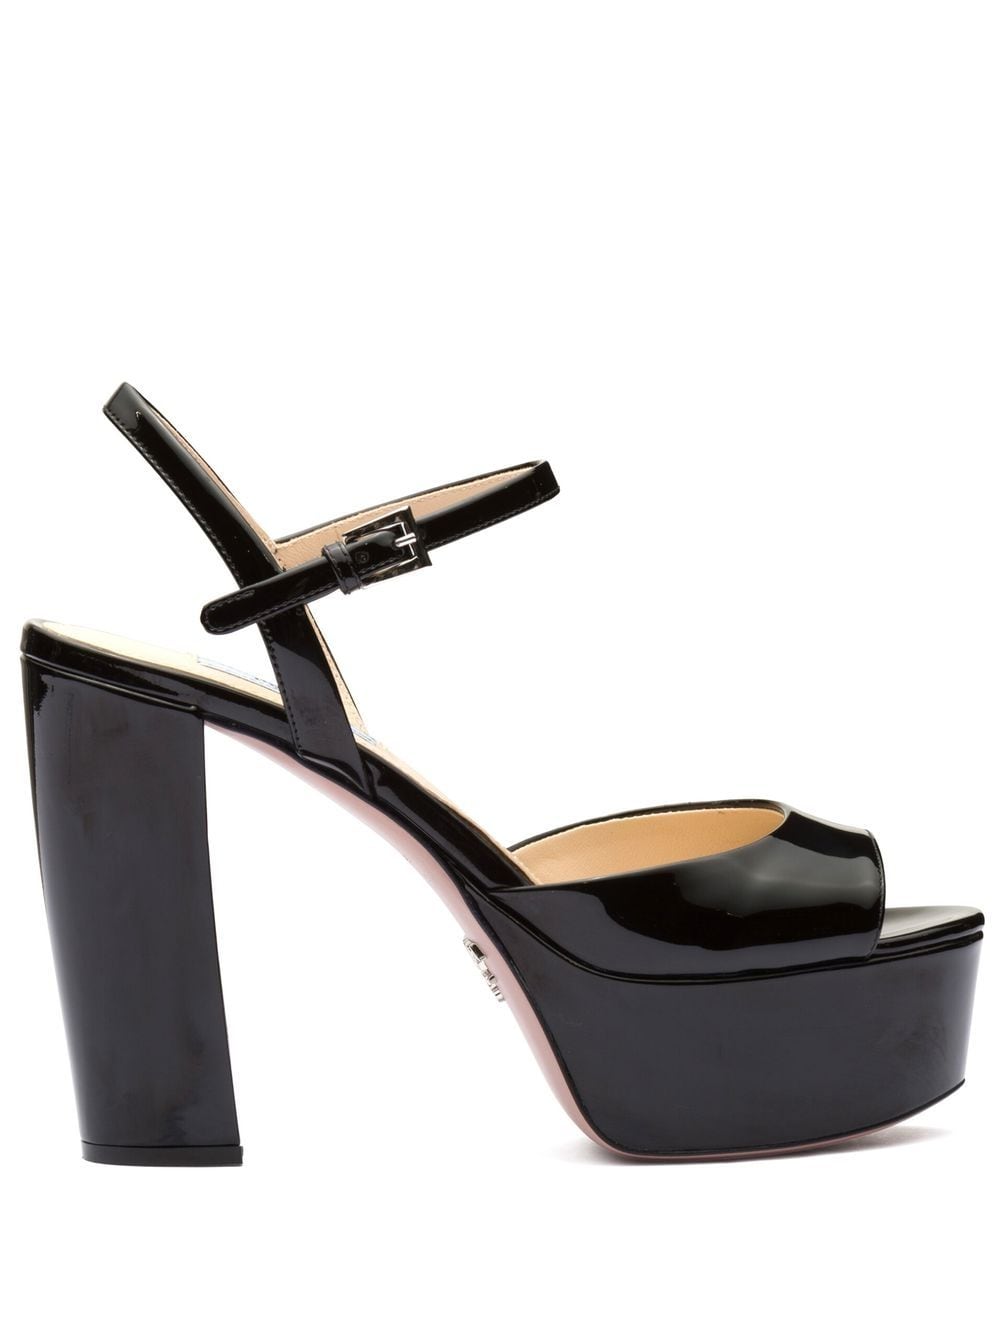 Prada high-heeled patent leather sandals - Black